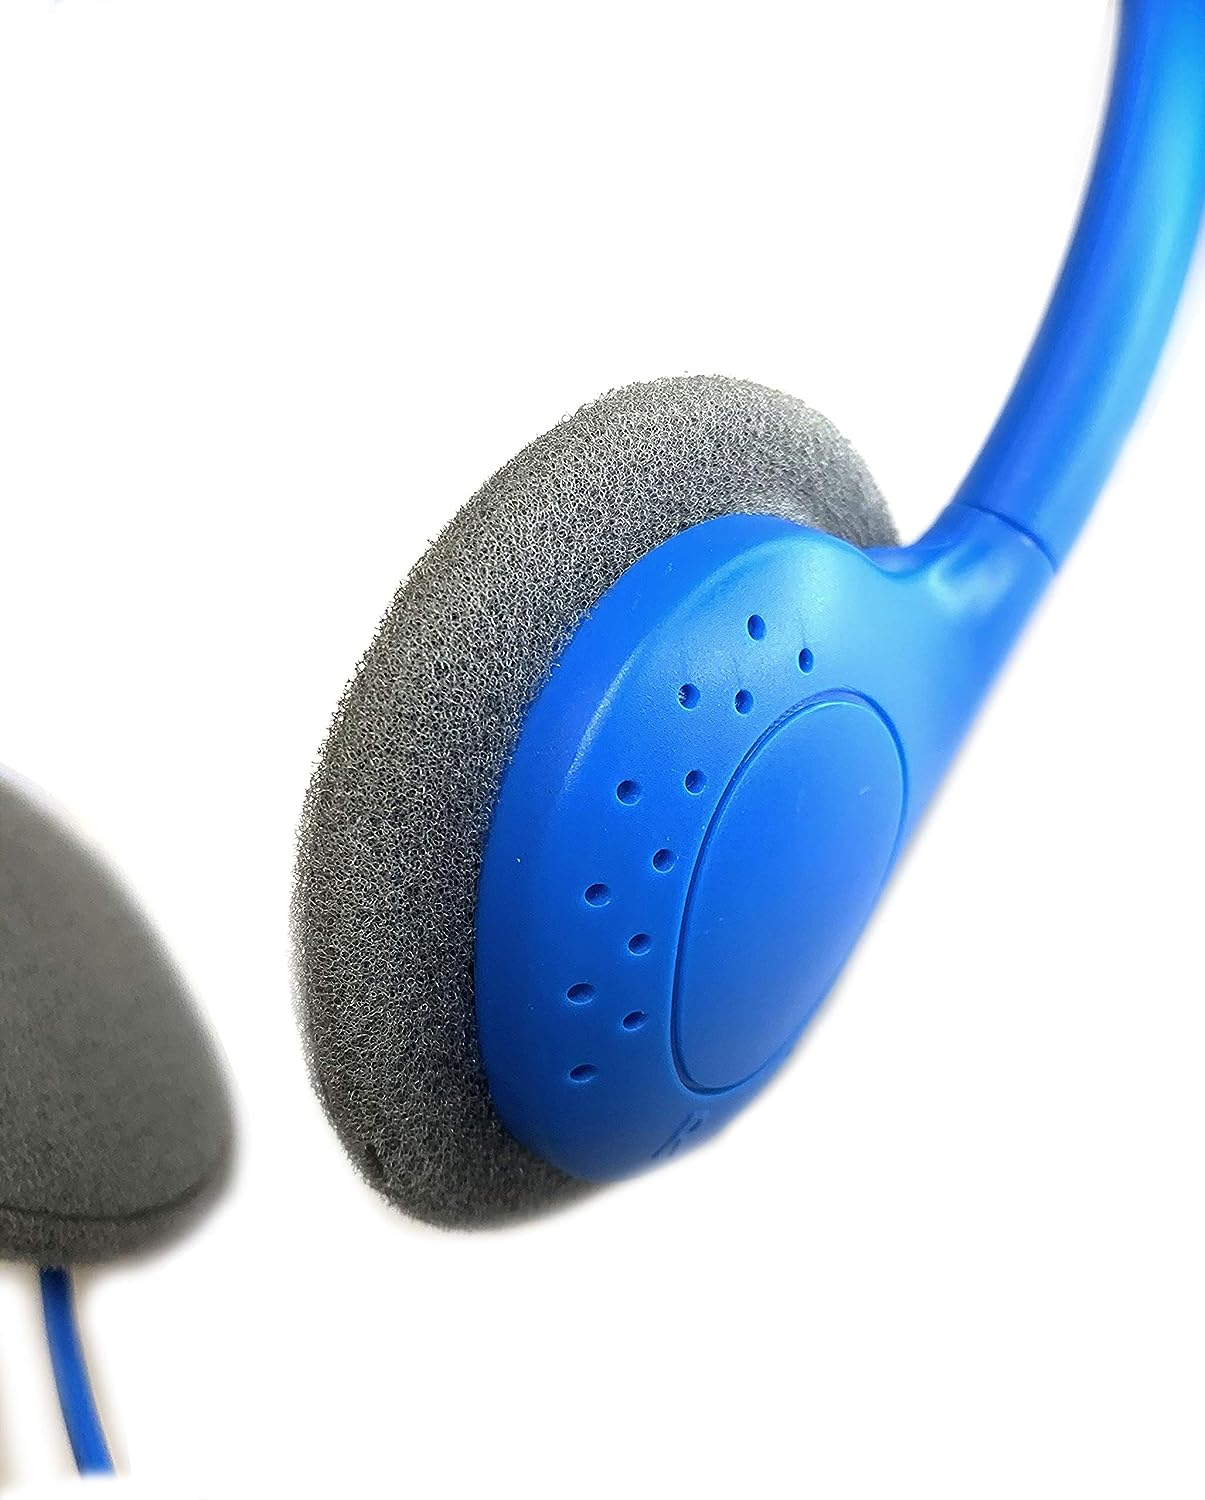 Bulk Classroom Headphones in Blue 50-Pack - SmithOutlet